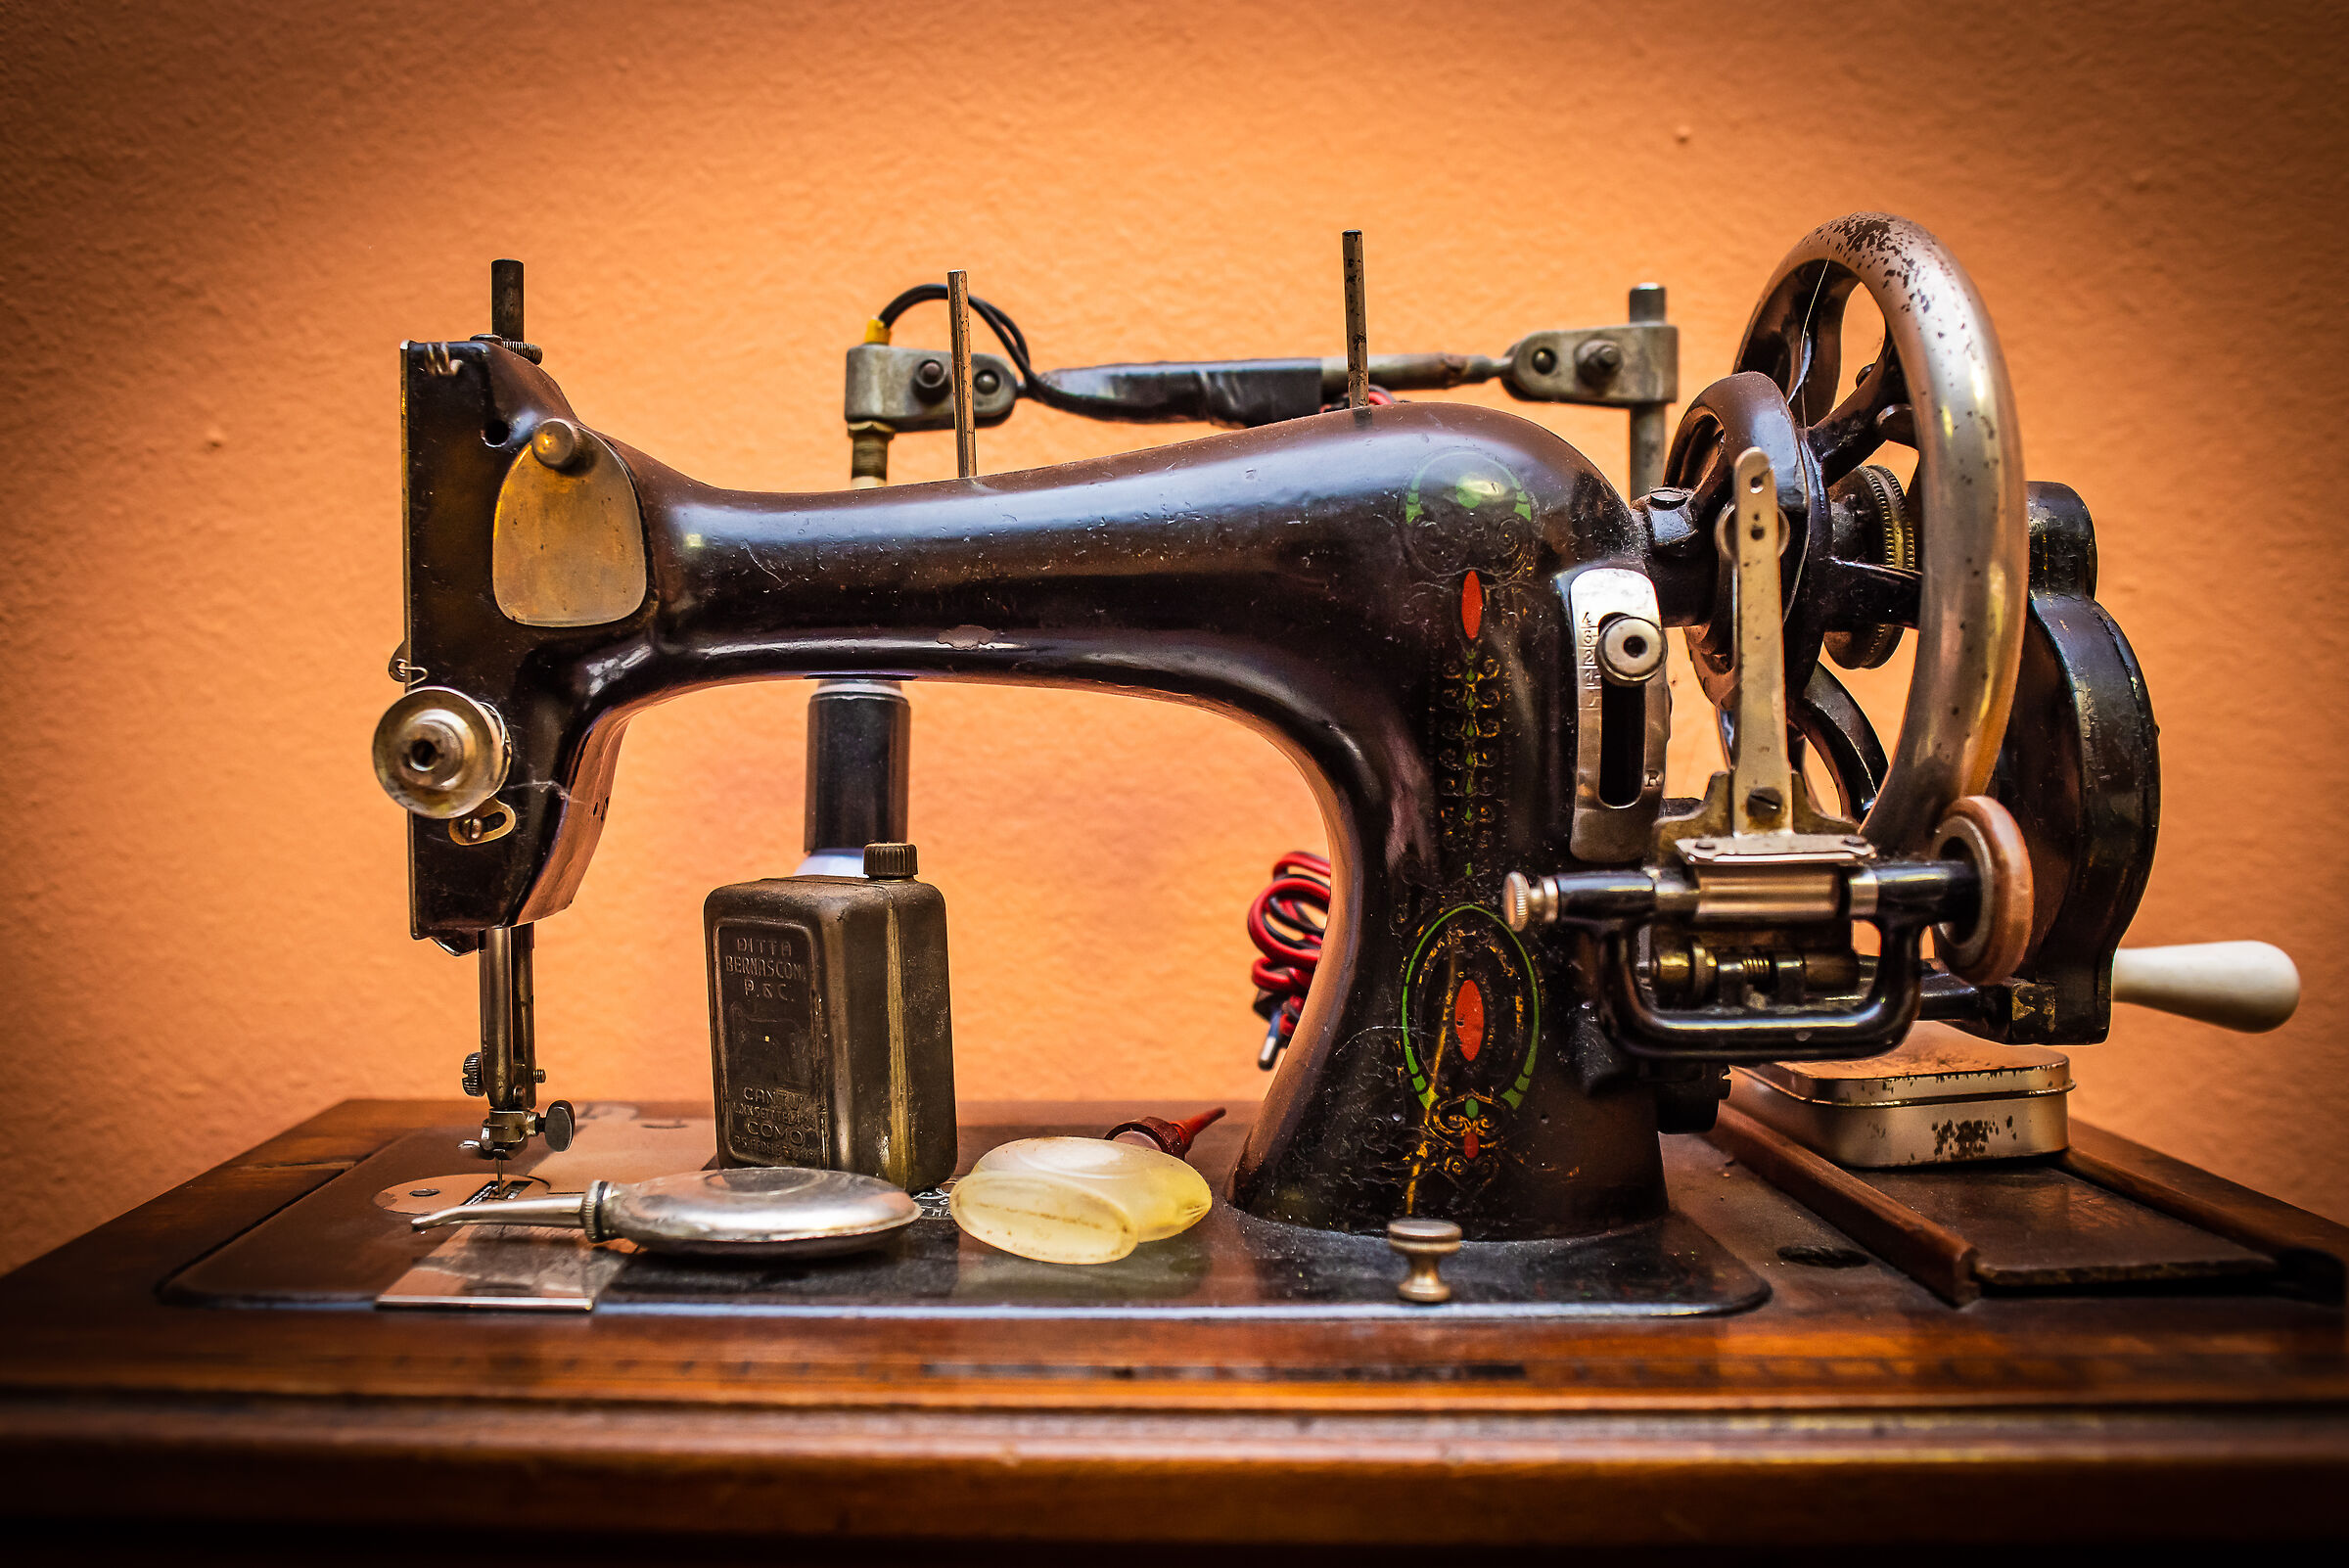 Sewing machine...